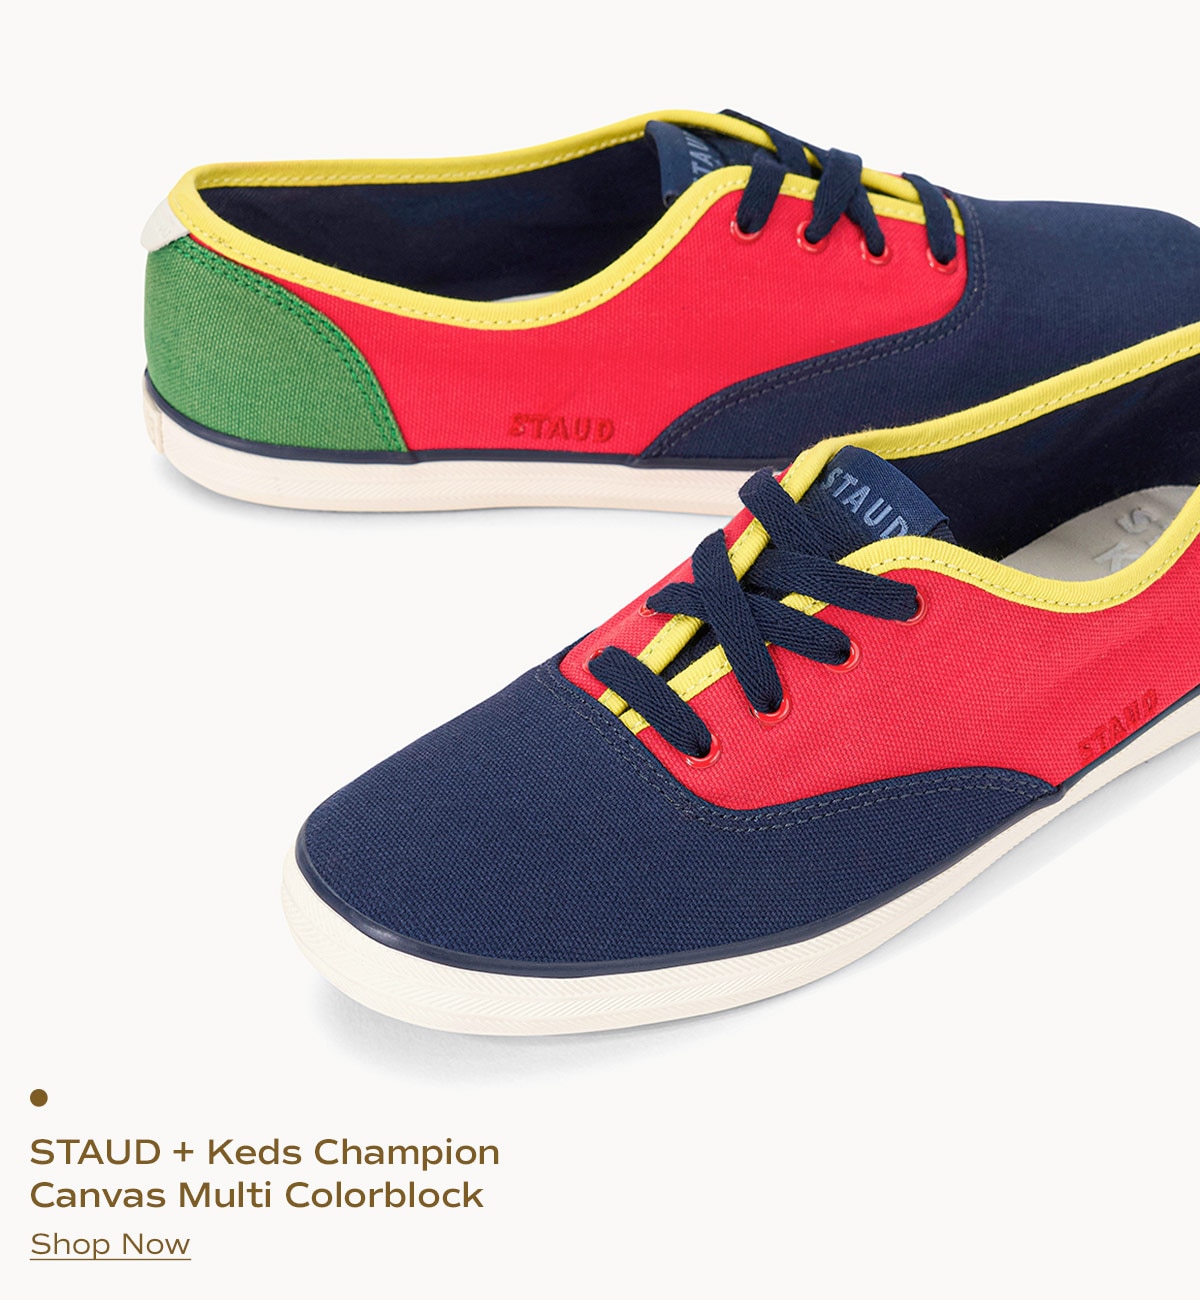 STAUD + Keds Champion Canvas Multi Colorblock | Shop Now